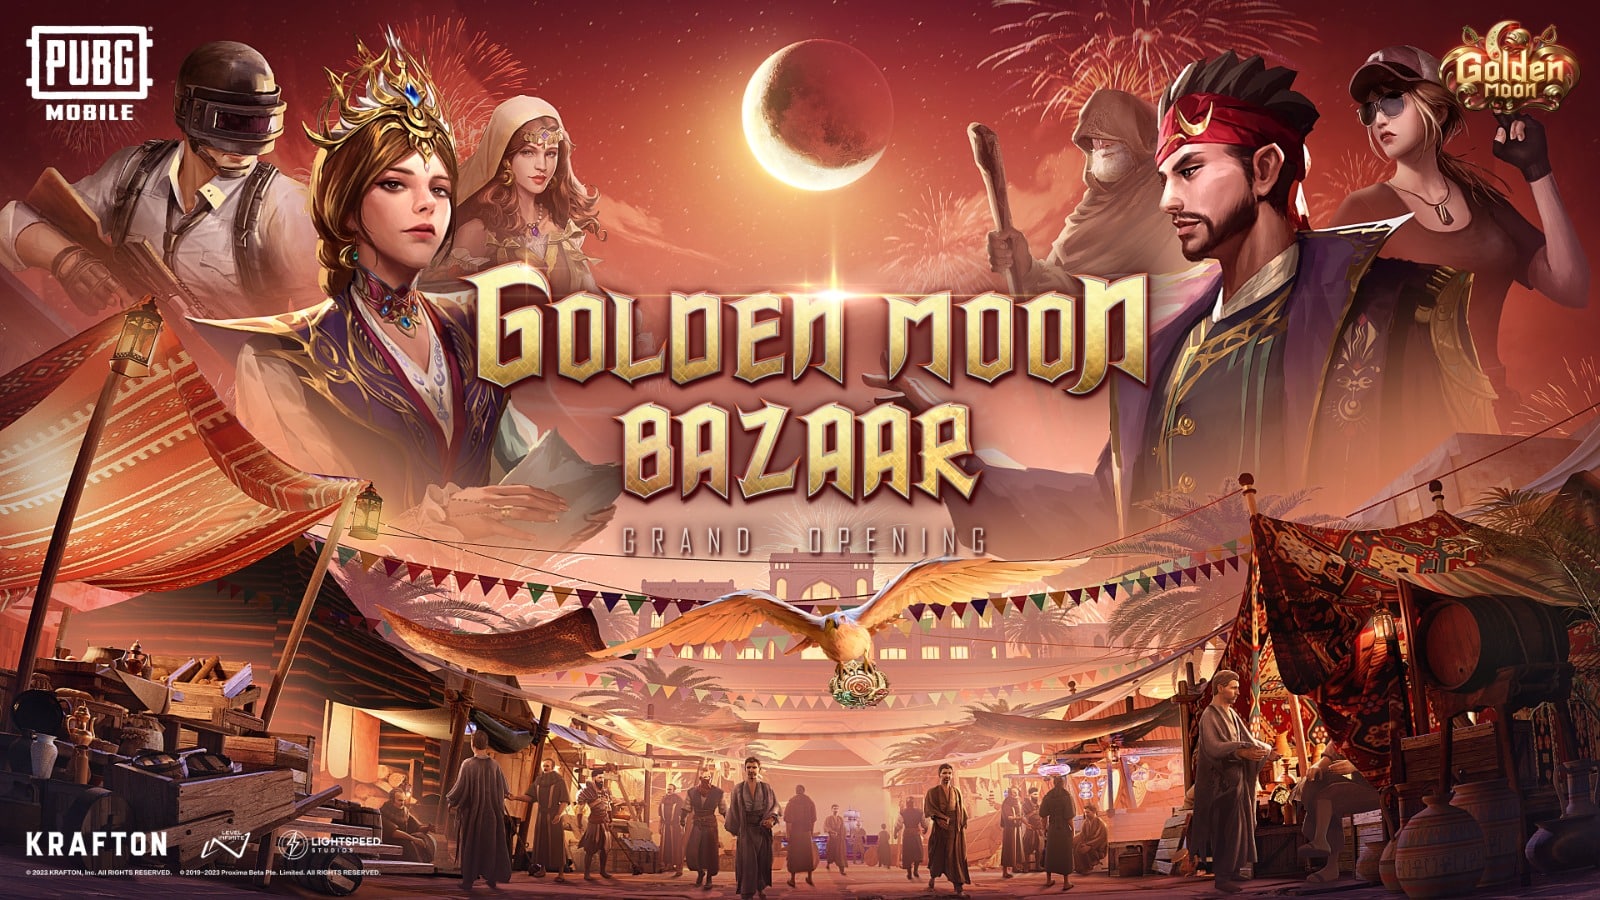 PUBG MOBILE Celebrates Ramadan With Golden Moon: The Tides